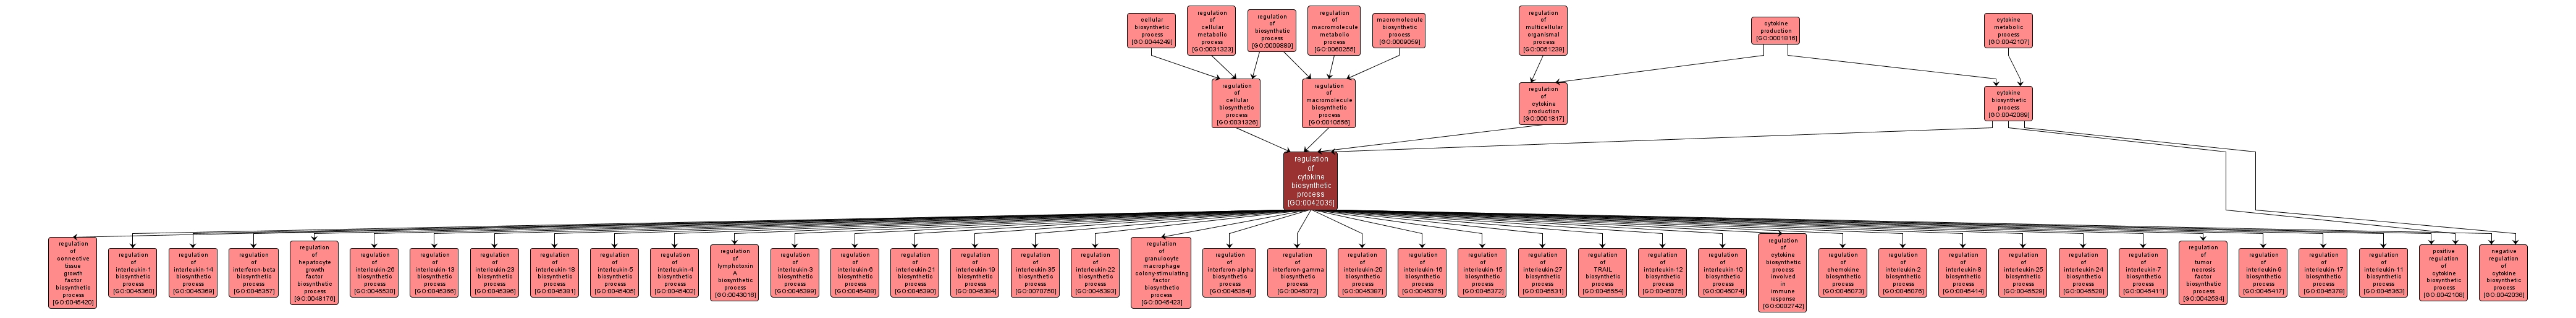 GO:0042035 - regulation of cytokine biosynthetic process (interactive image map)